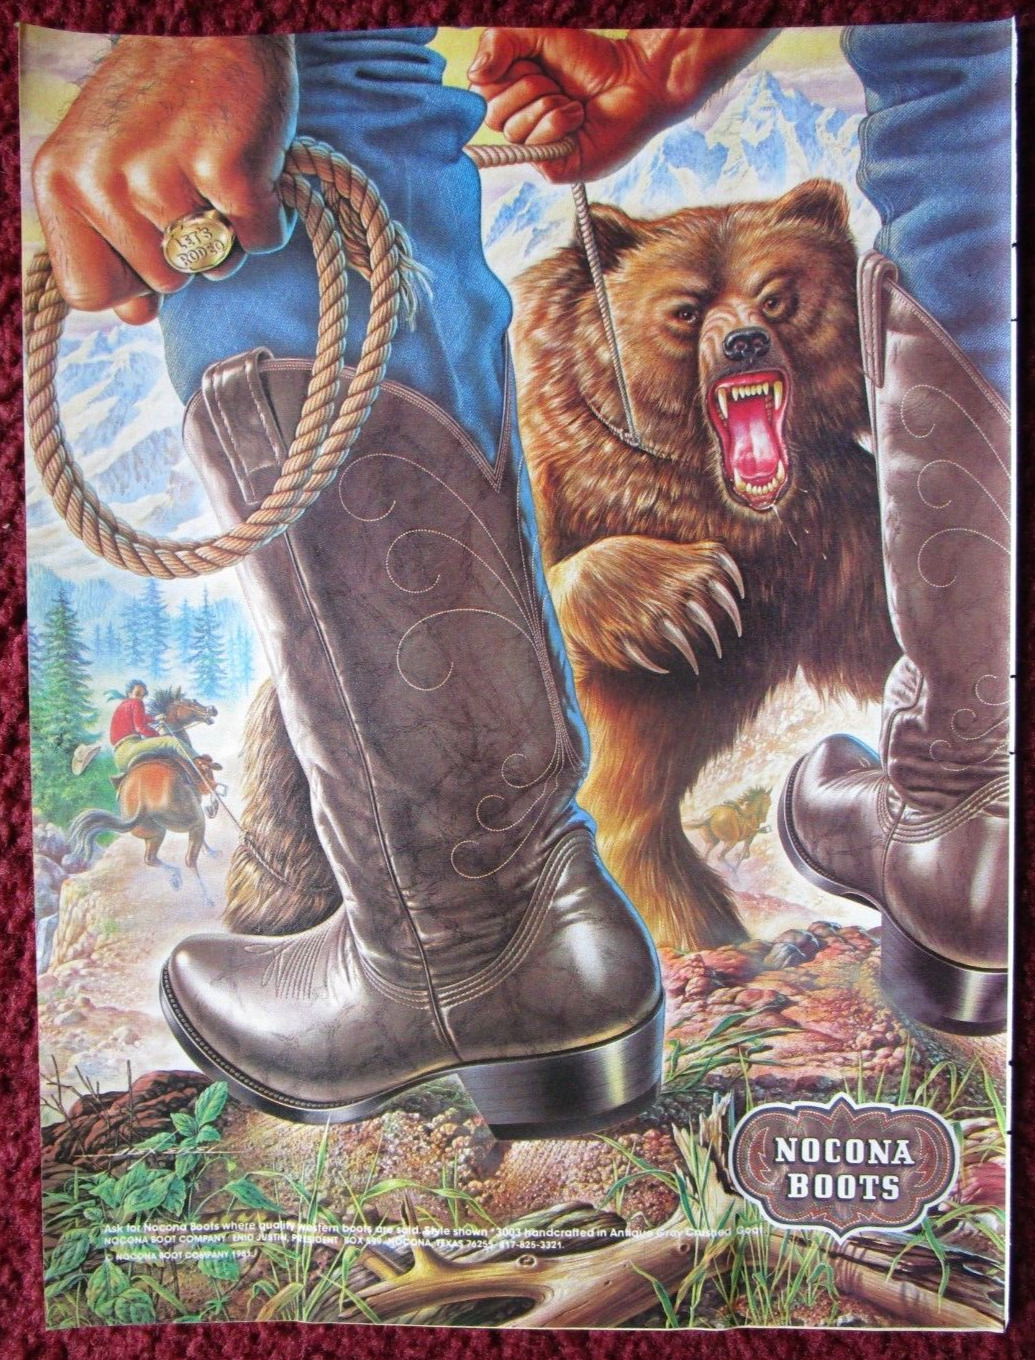 1981 NOCONA Cowboy Boots Magazine Print Ad Clipping ~ Brown Bear Alex Ebel Art